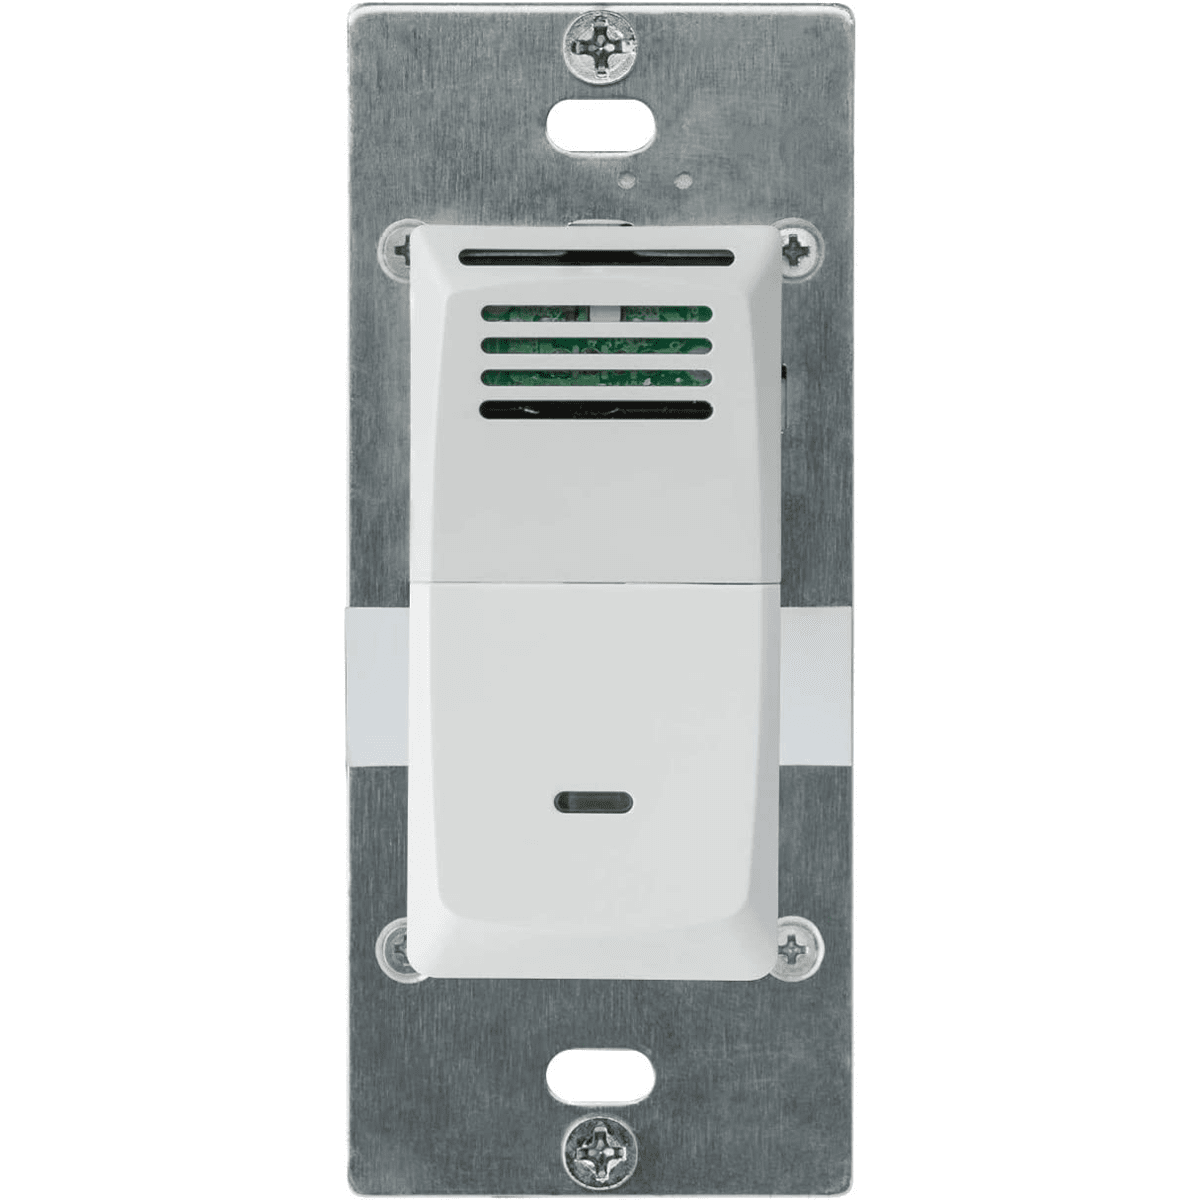 Broan Humidity Sensing Wall Control (82W)